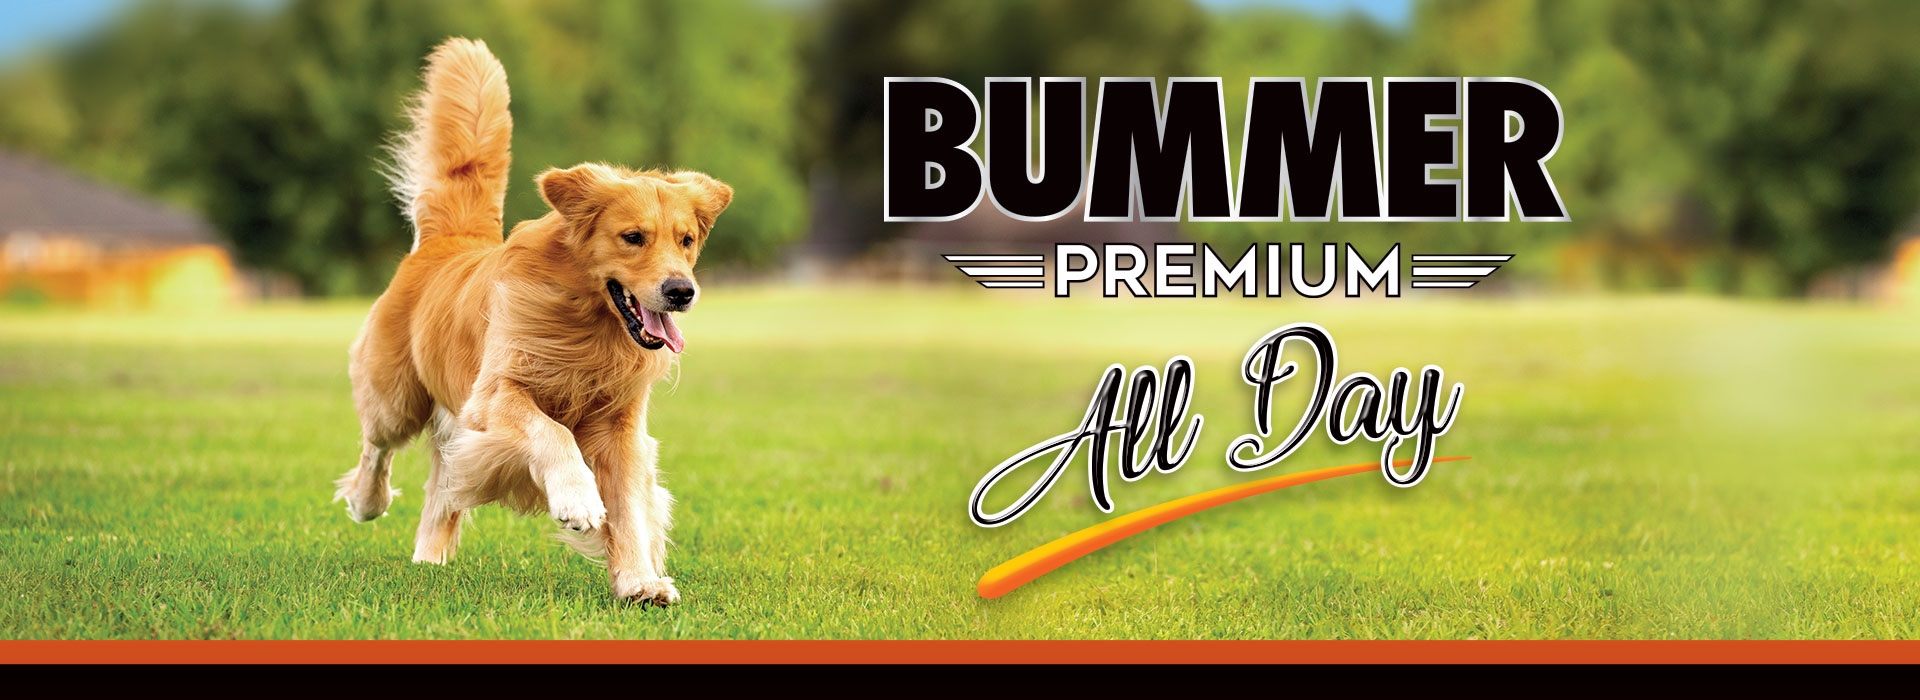 Bummer Premium